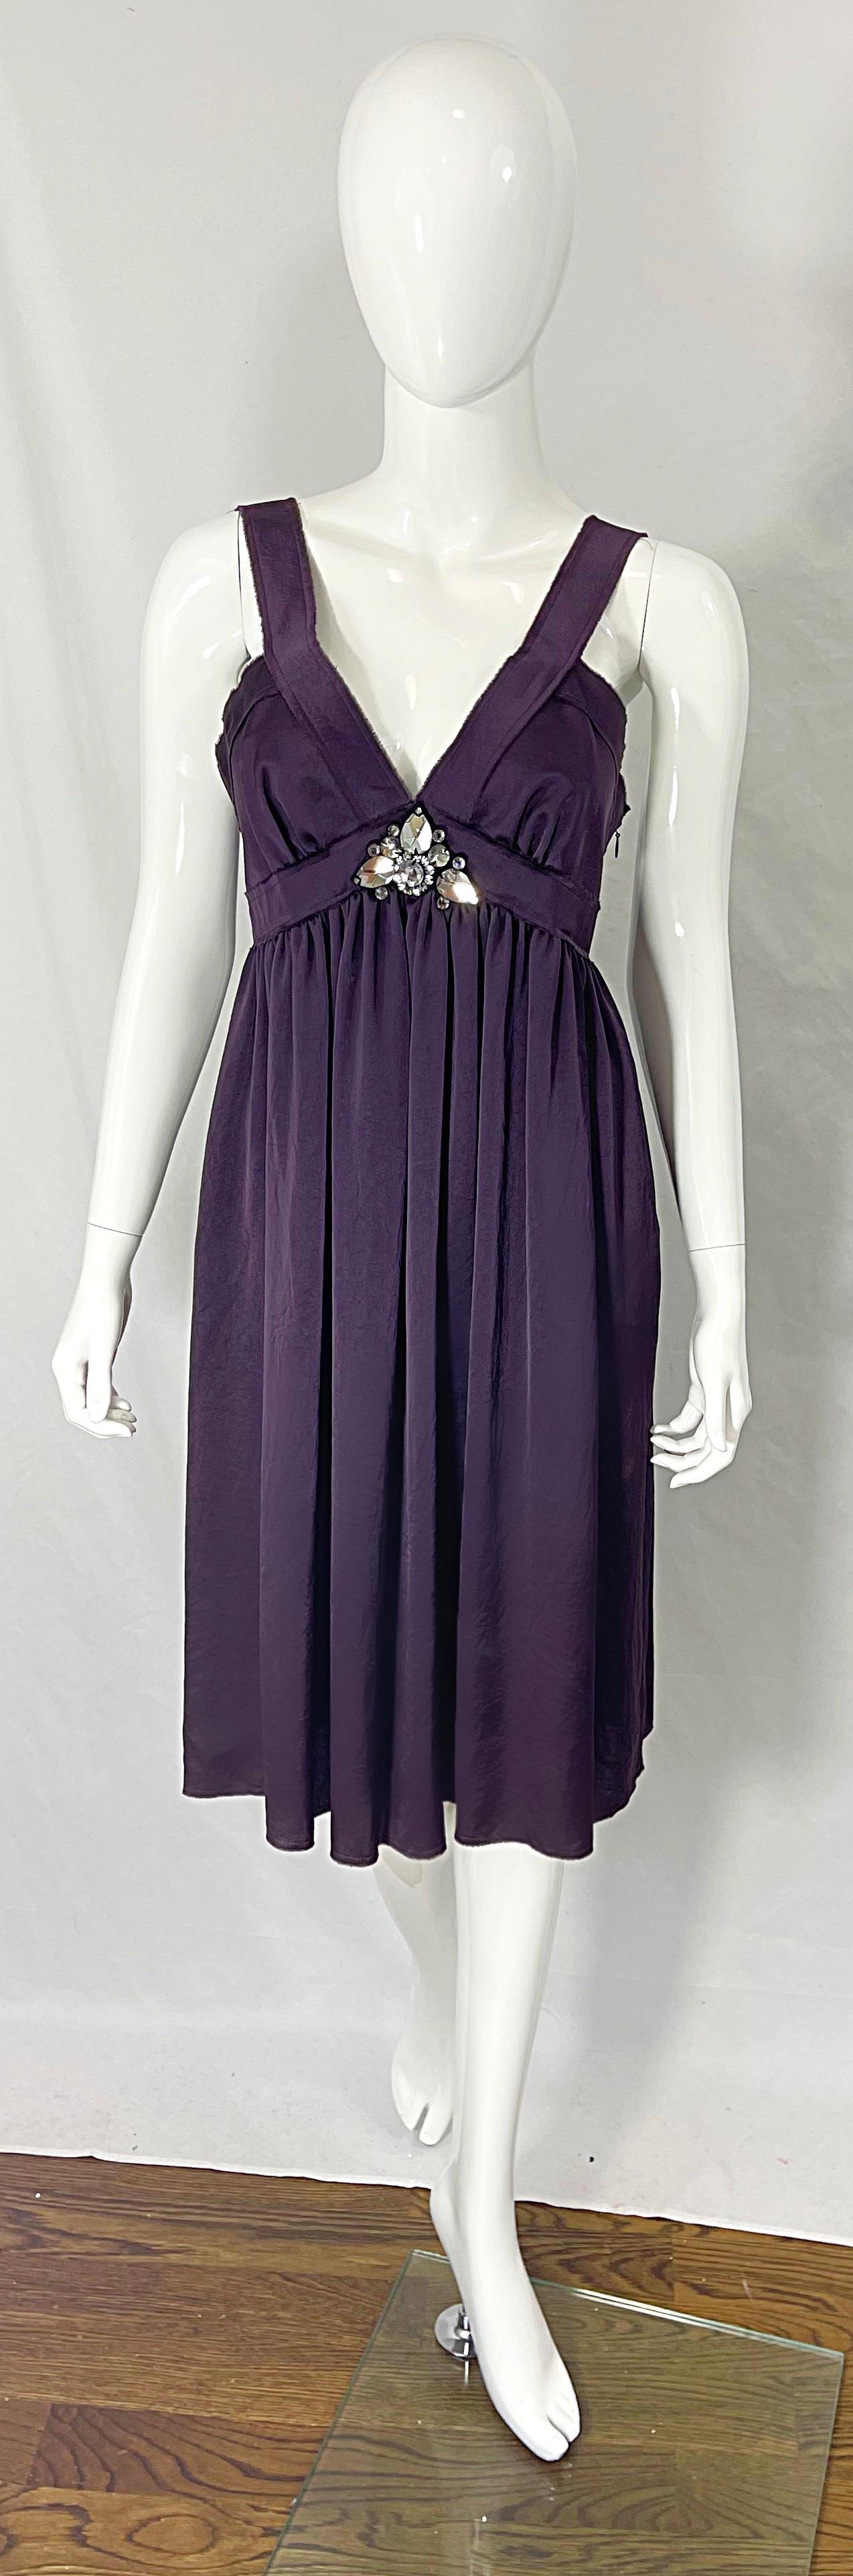 Lanvin S/S 2007 Alber Elbaz Sz 38 Purple Rhinestone Encrusted Empire Waist Dress For Sale 8